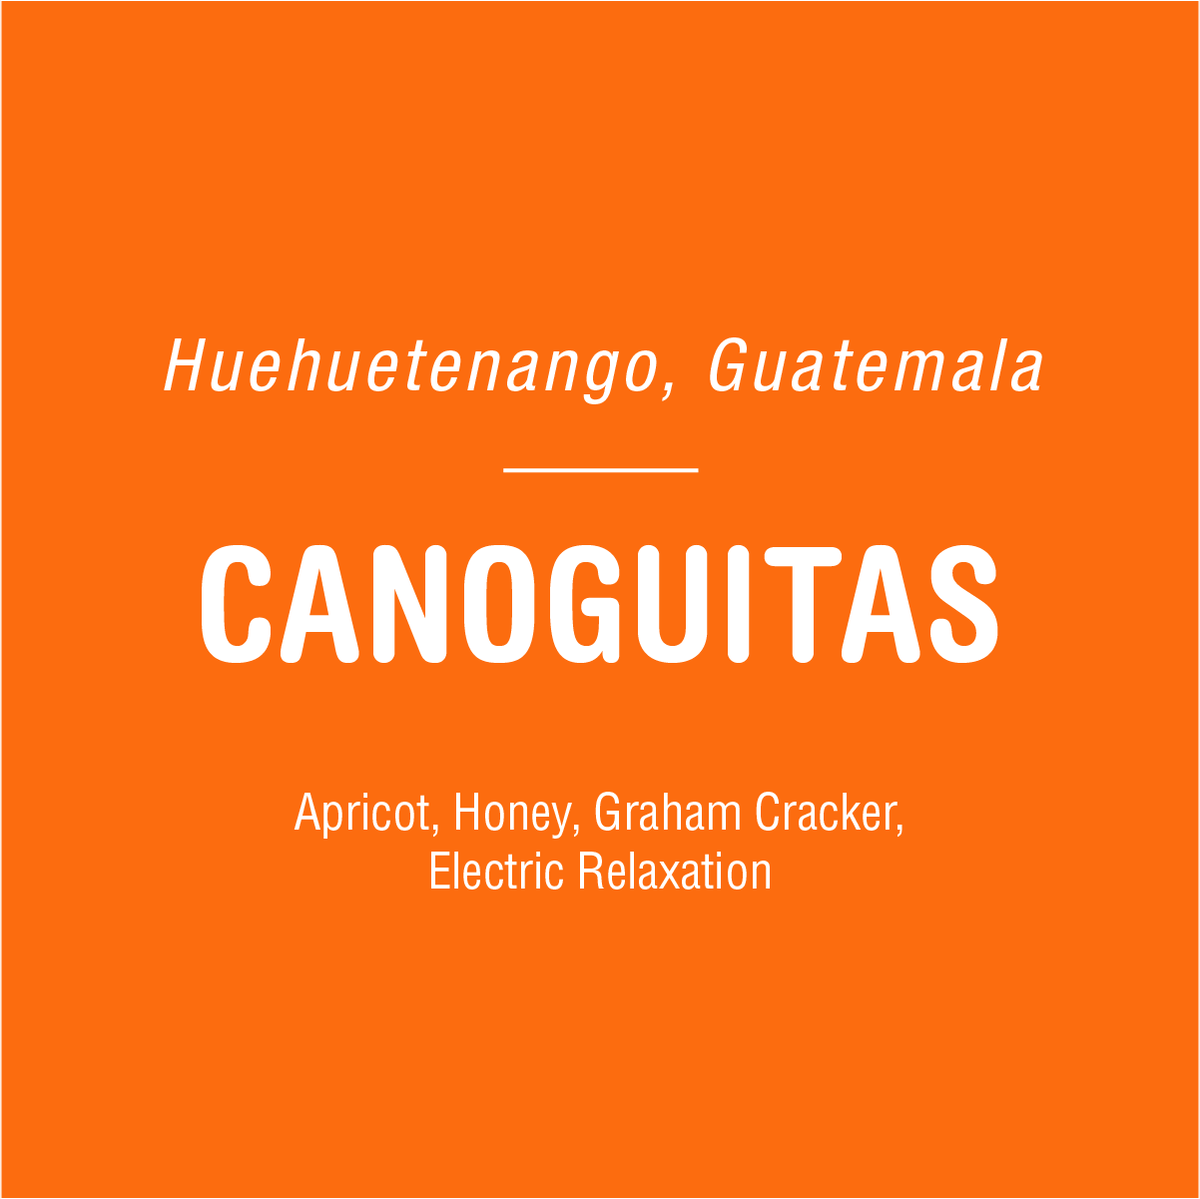 Canoguitas - Guatemala